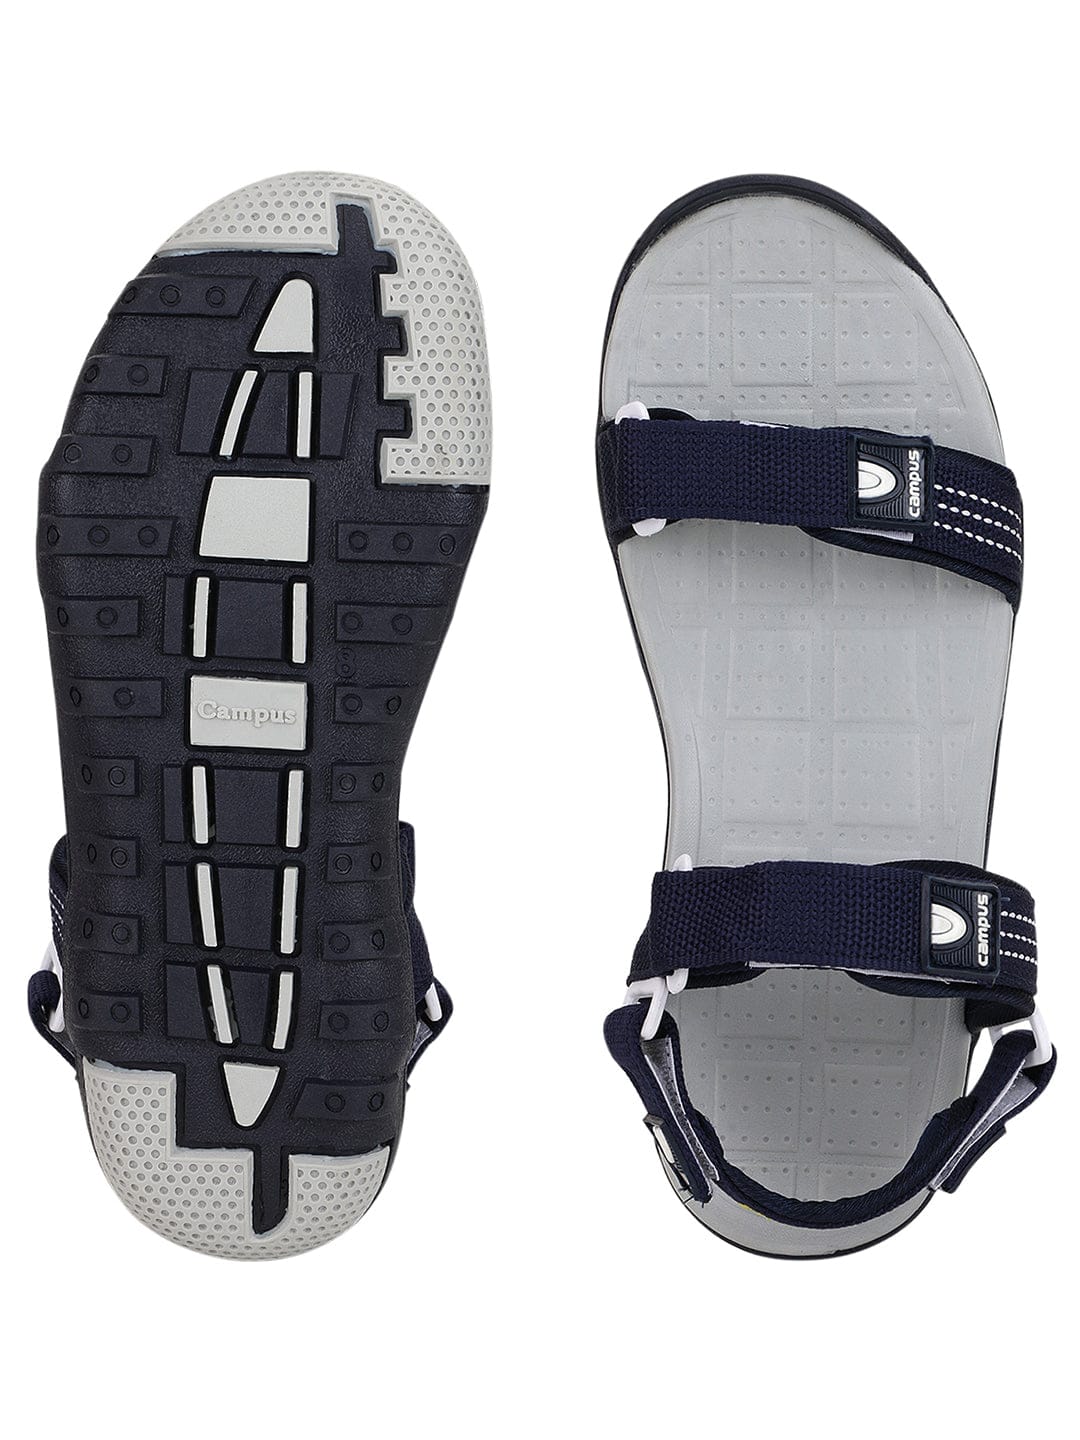 Reebok Men Trail Striker Lp Black/Awesome Blue Outdoor Sandals-6 UK (39 EU)  (7 US) (FV9335) : Amazon.in: Fashion